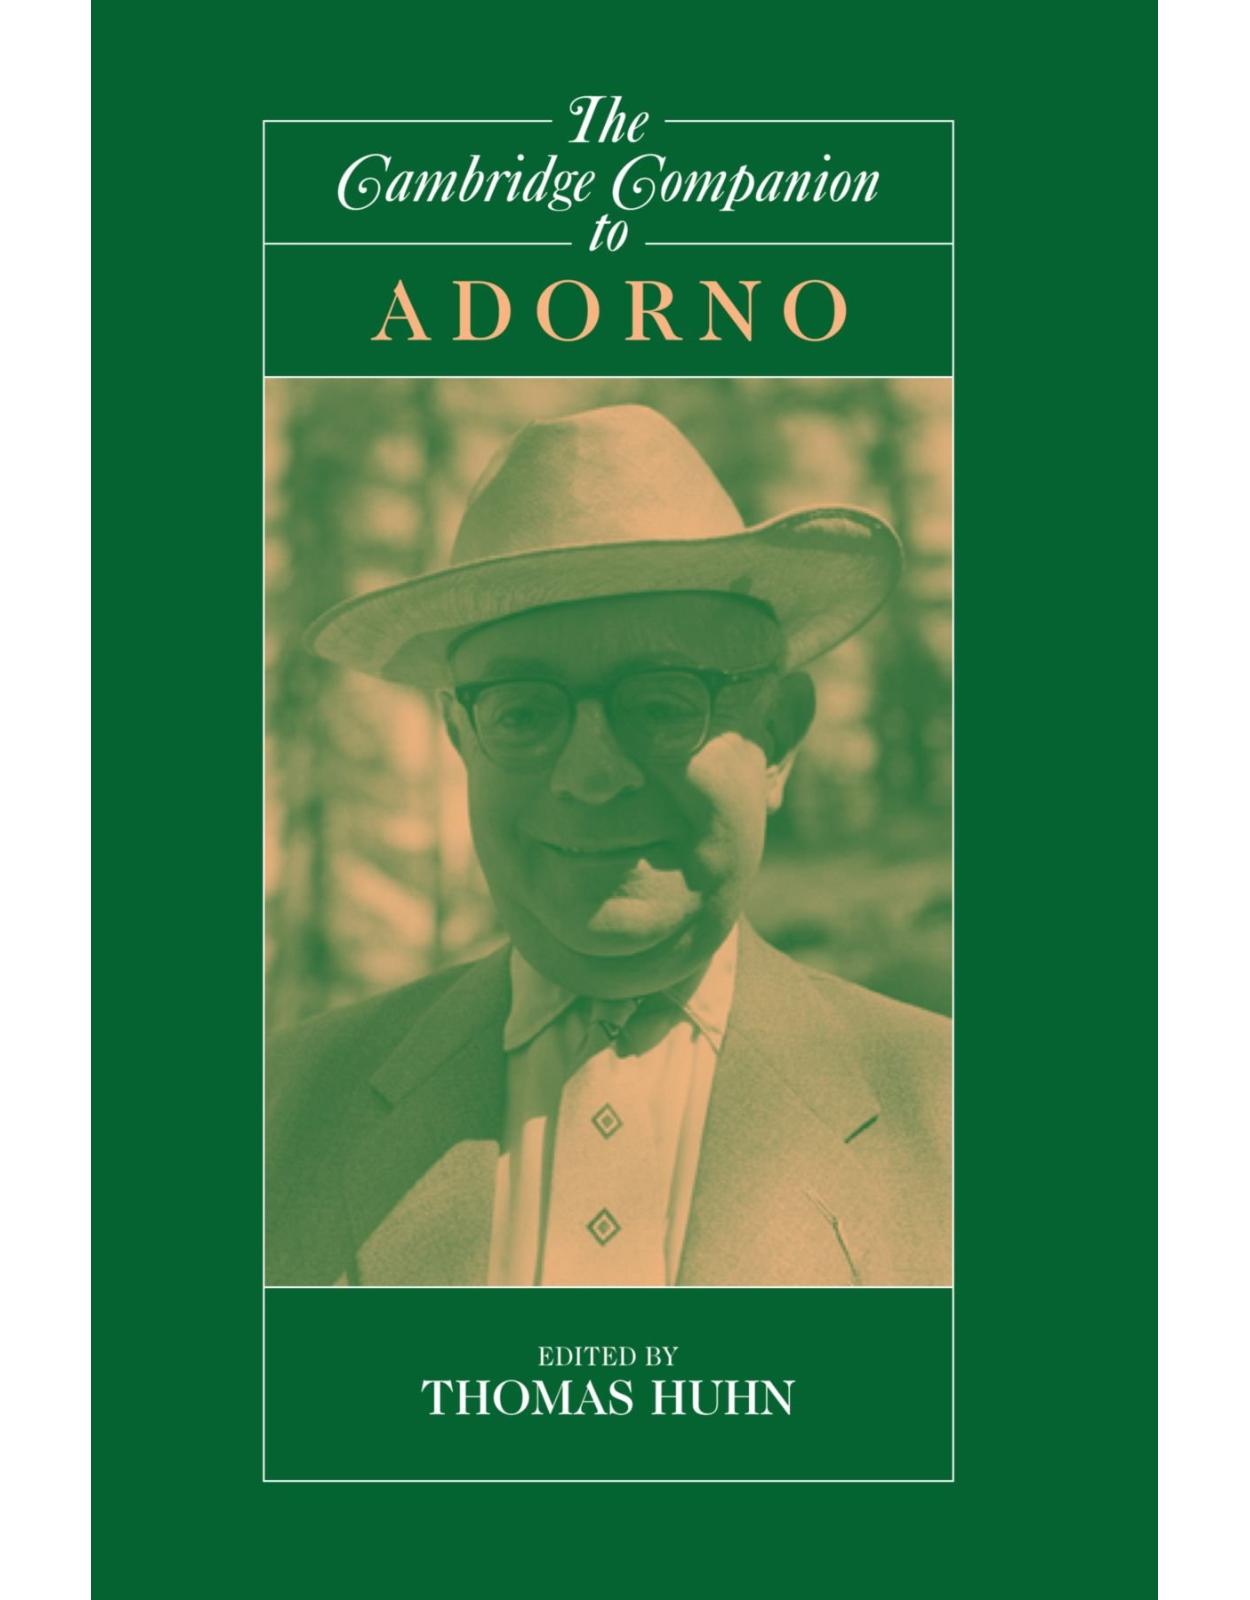 The Cambridge Companion to Adorno (Cambridge Companions to Philosophy)